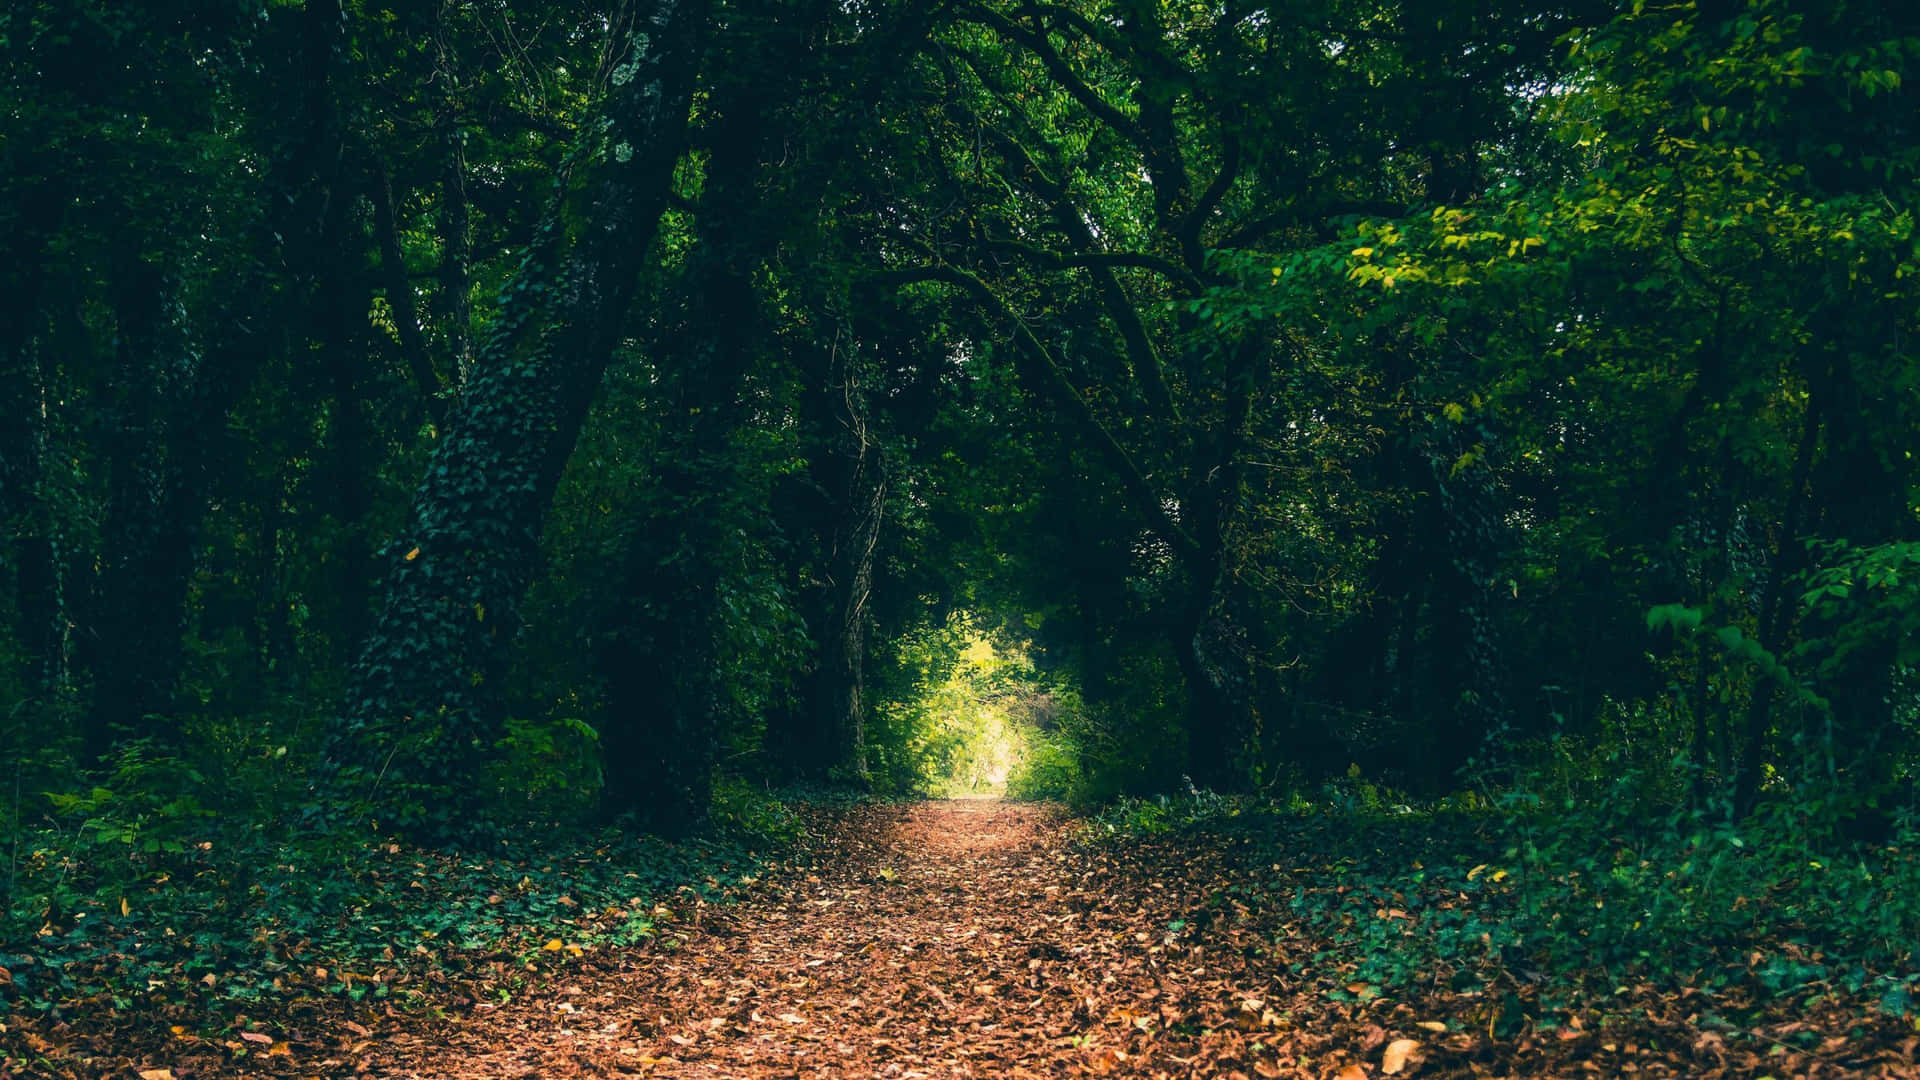 "An enchanting walk through a peaceful magical forest."